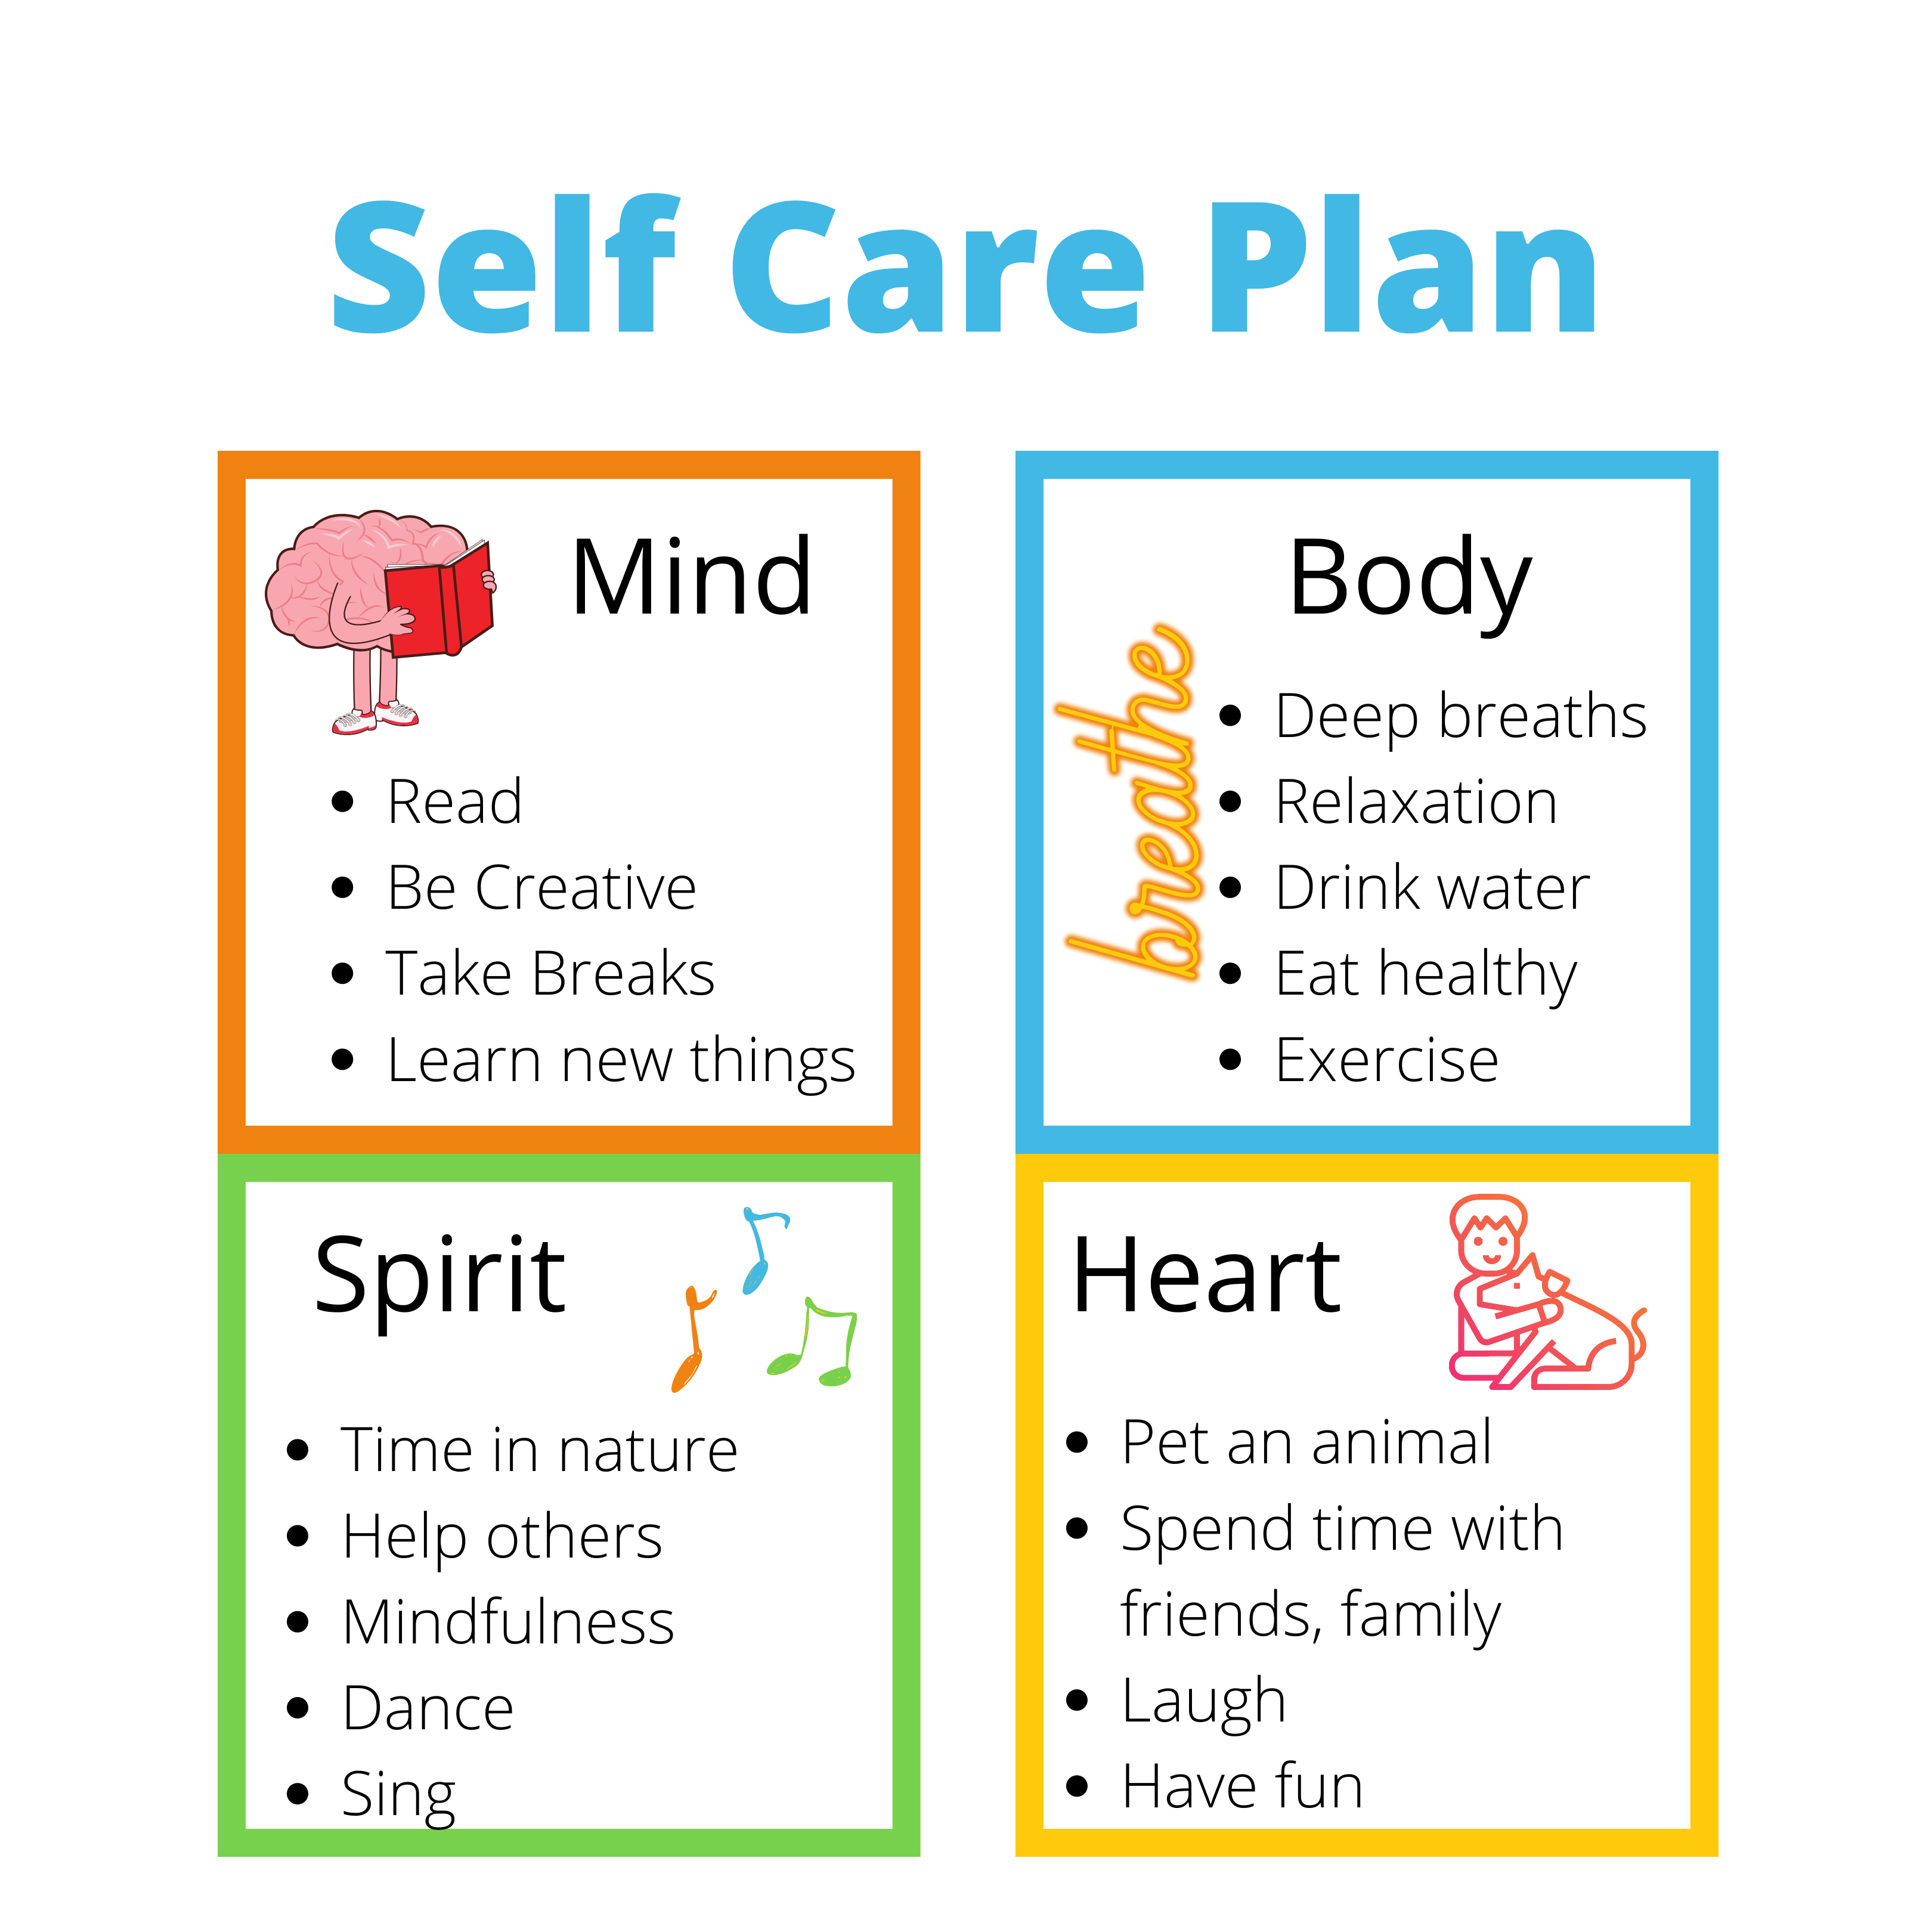 self care plan essay